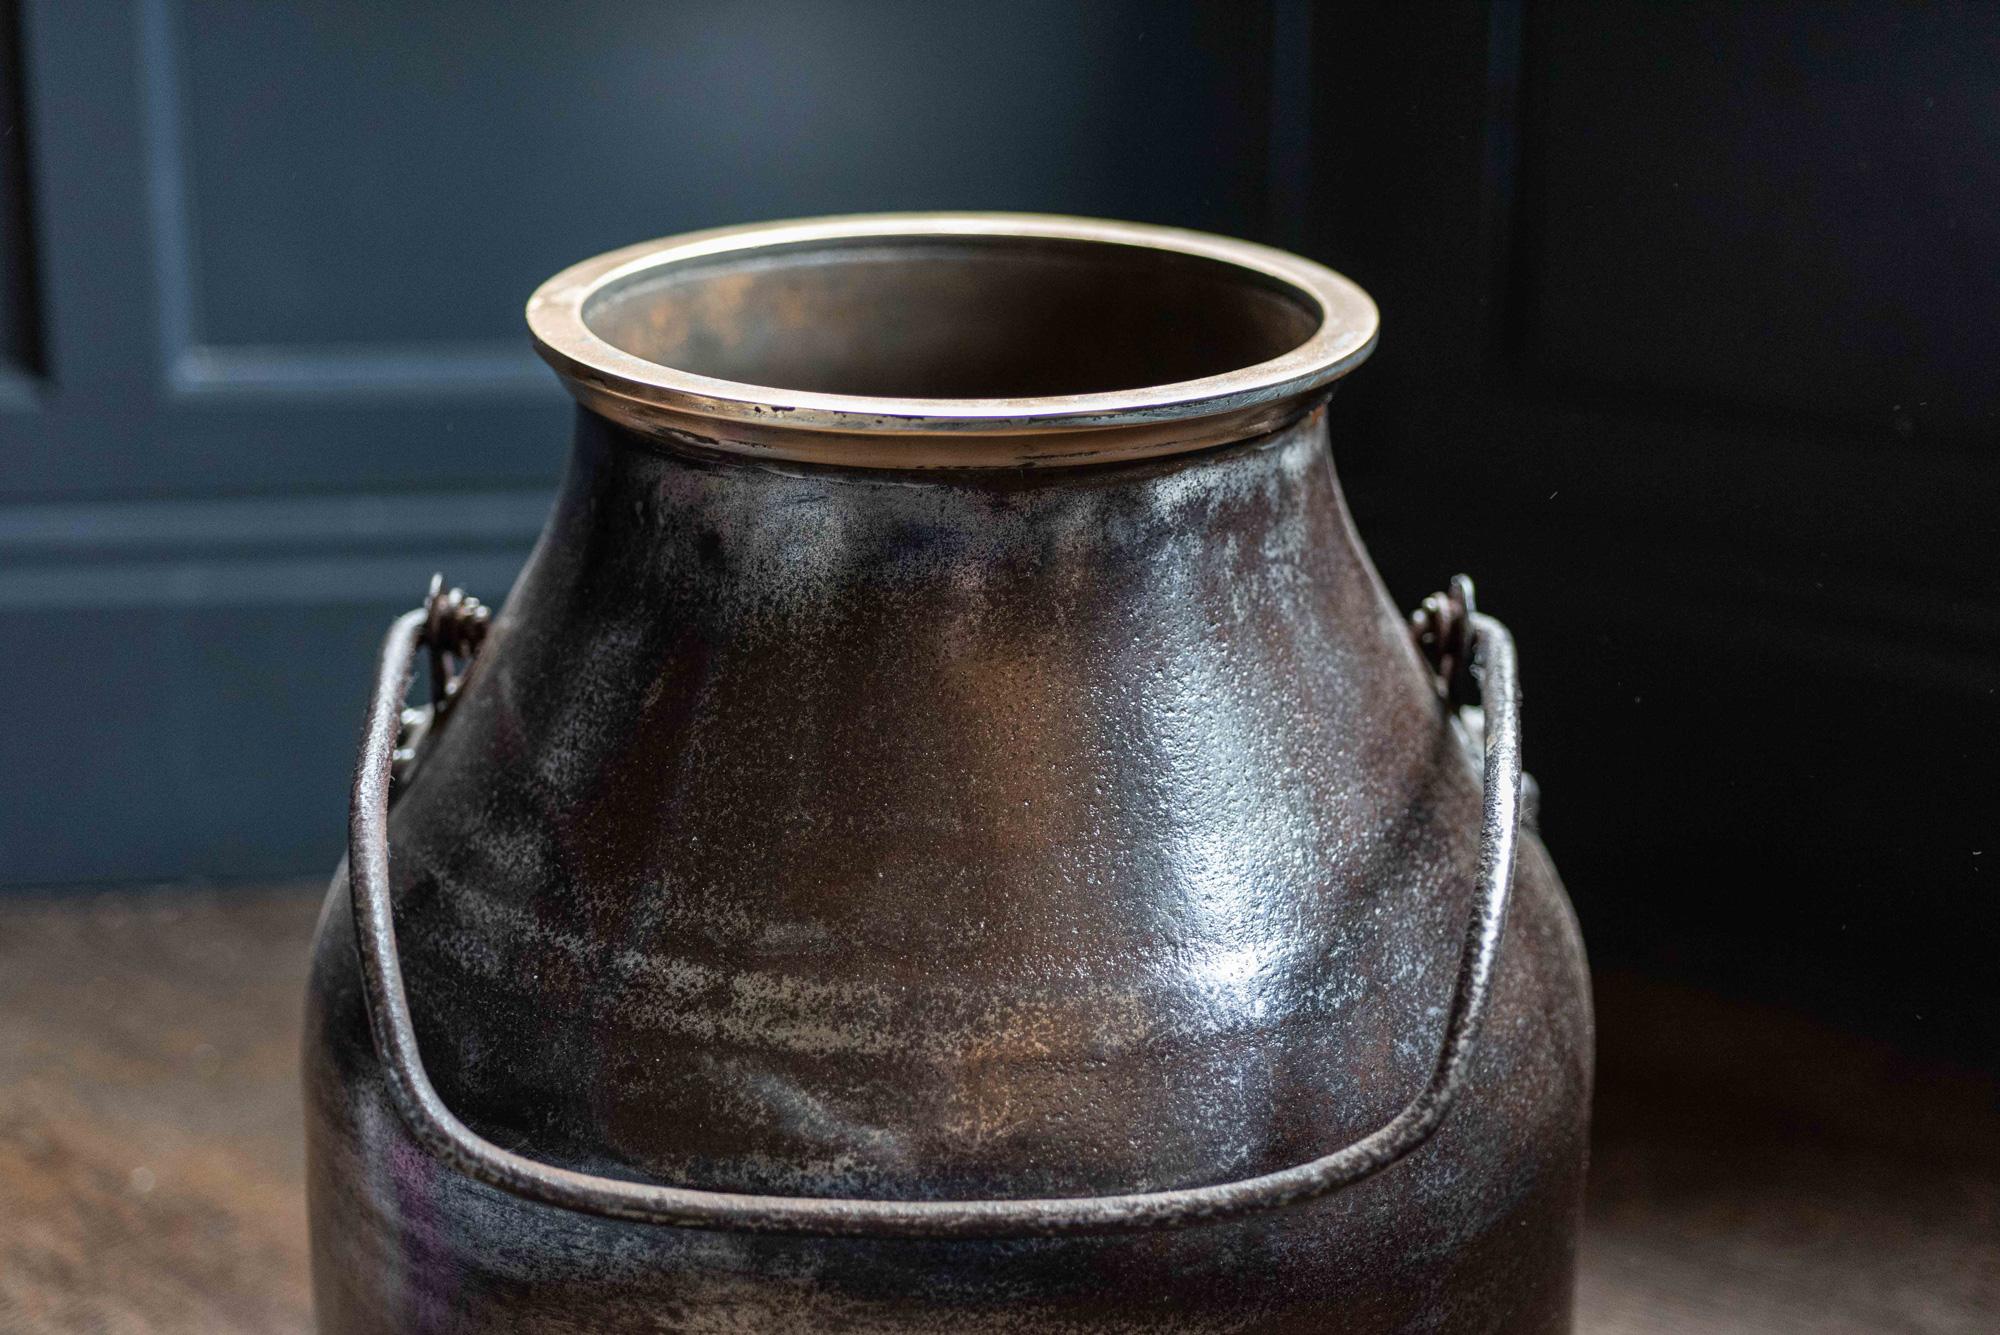 English Polished Iron and Brass Bound Milk Churn, Late 19th Century